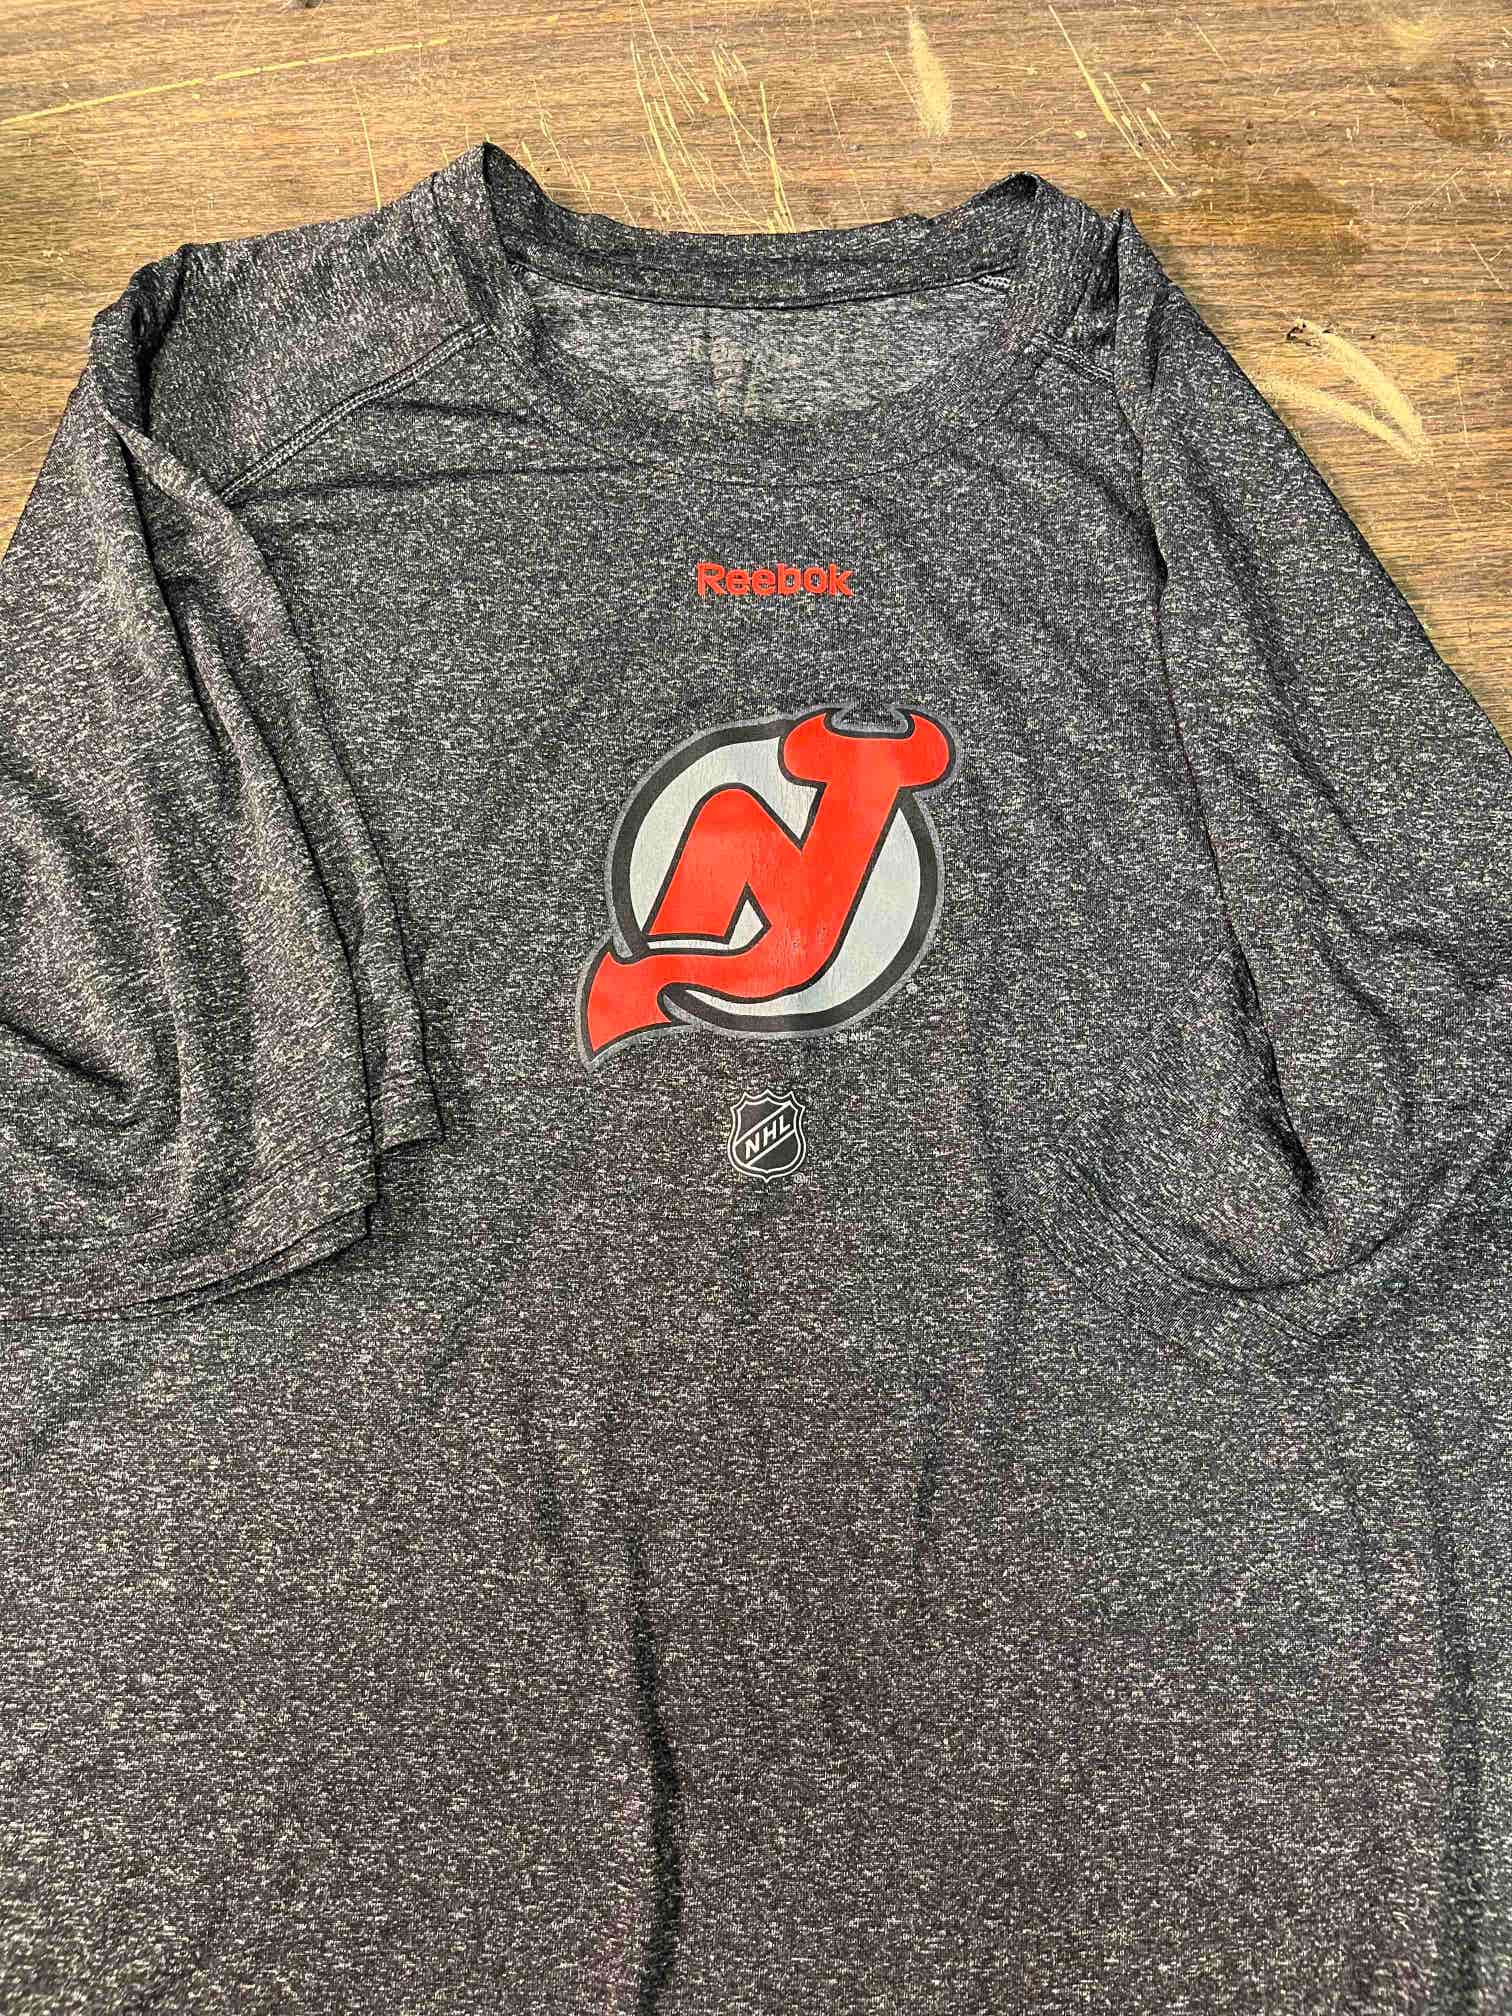 NJ Devils Reebok T Shirt